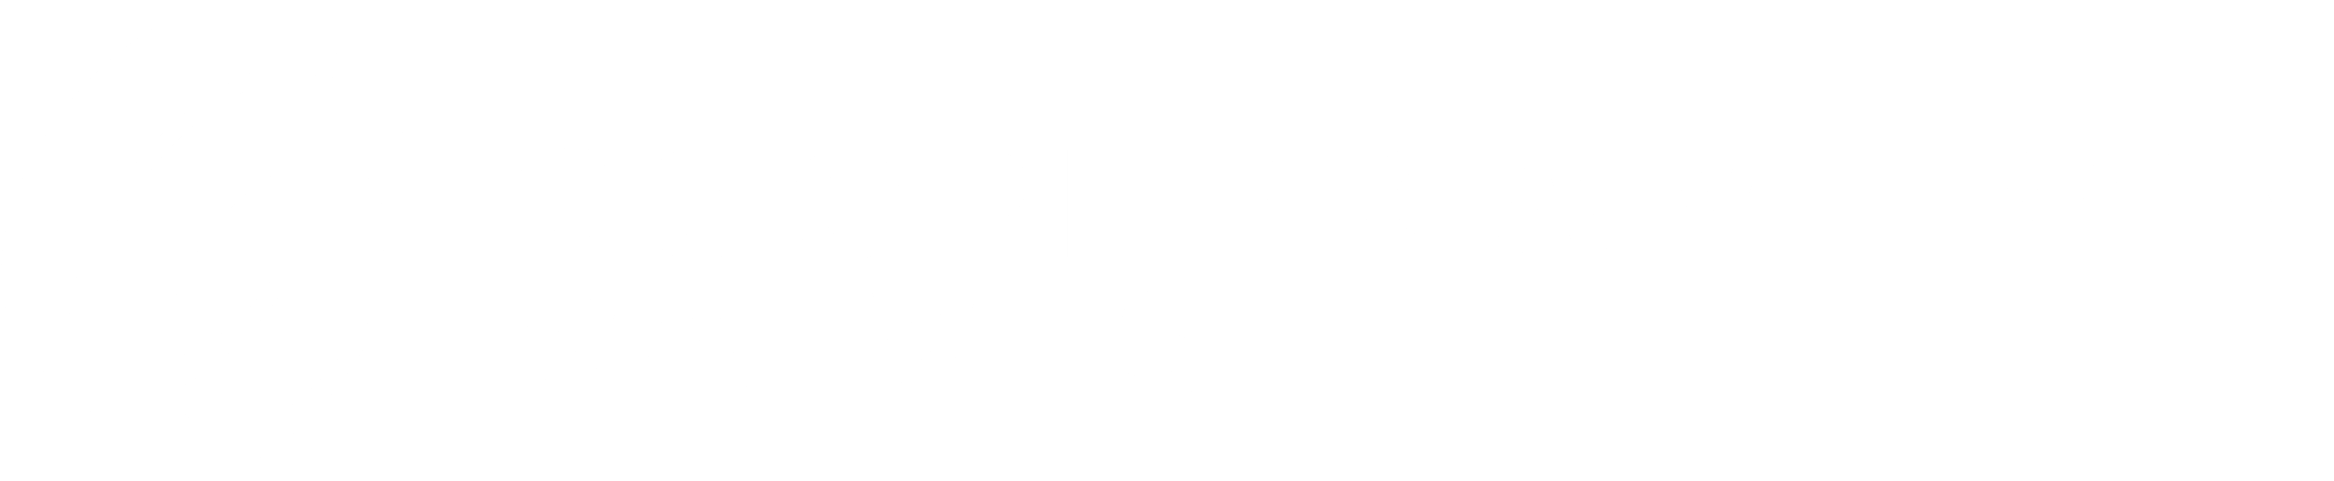 Cooper Cameron Valves Logo Black And White - Johns Hopkins White Logo (2400x2400), Png Download